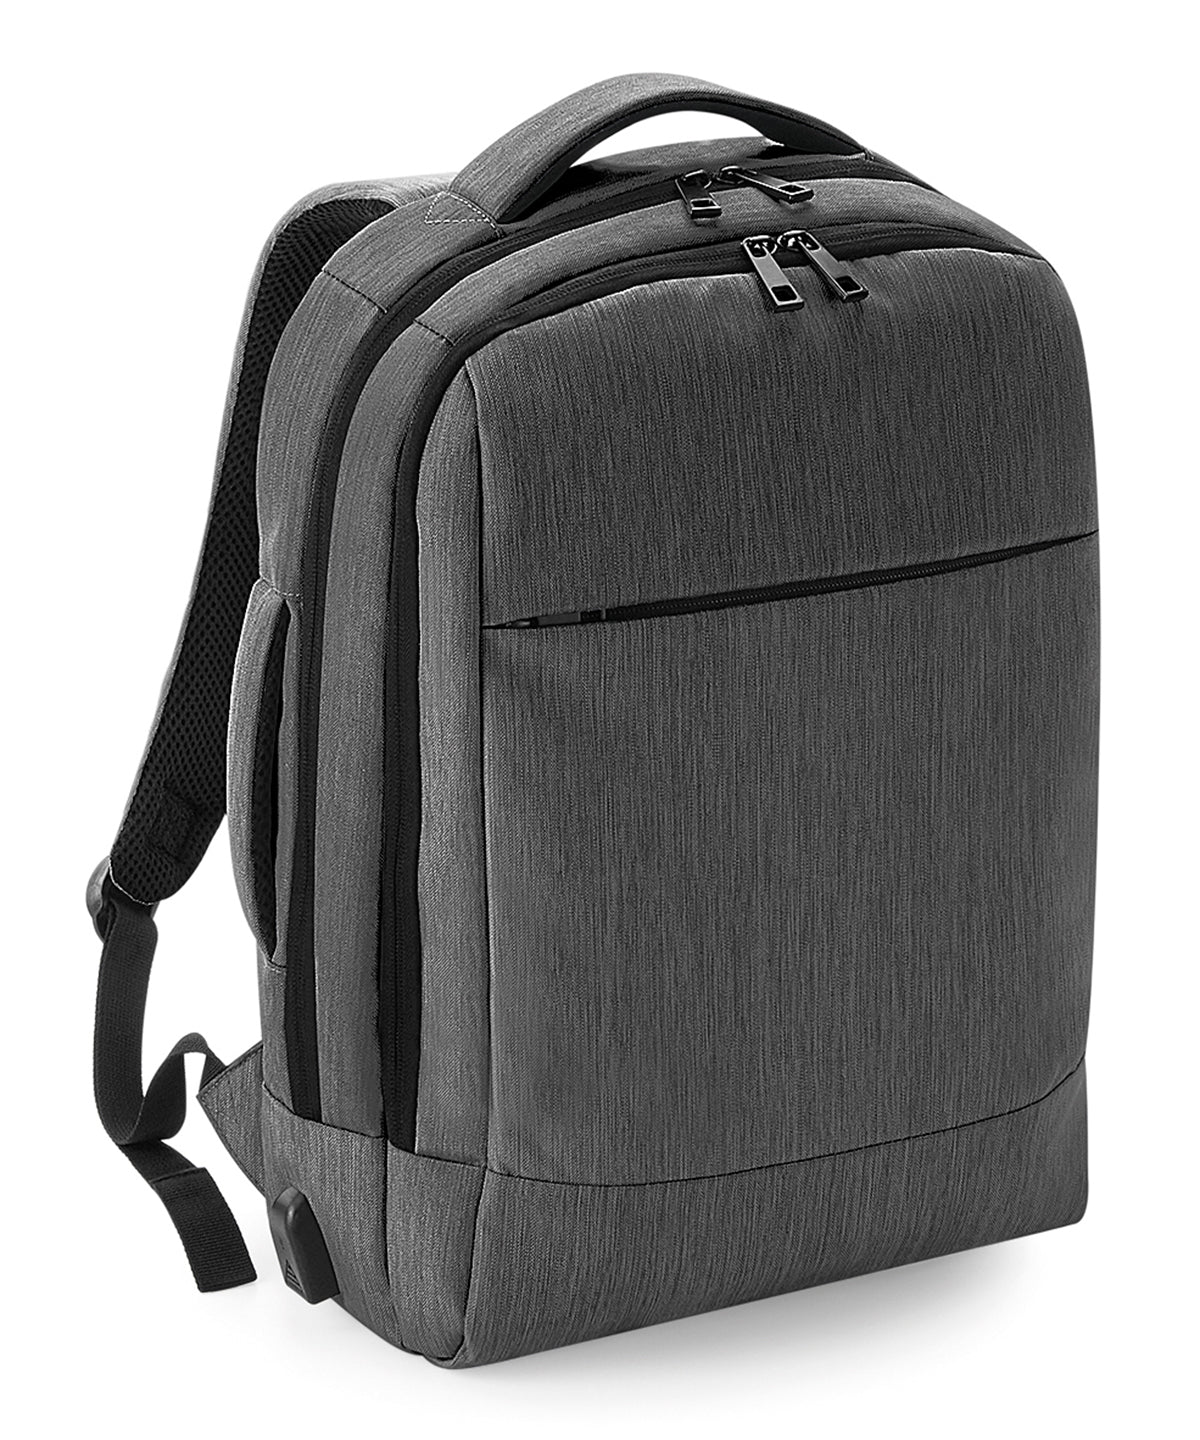 Töskur - Q-Tech Charge Convertible Backpack